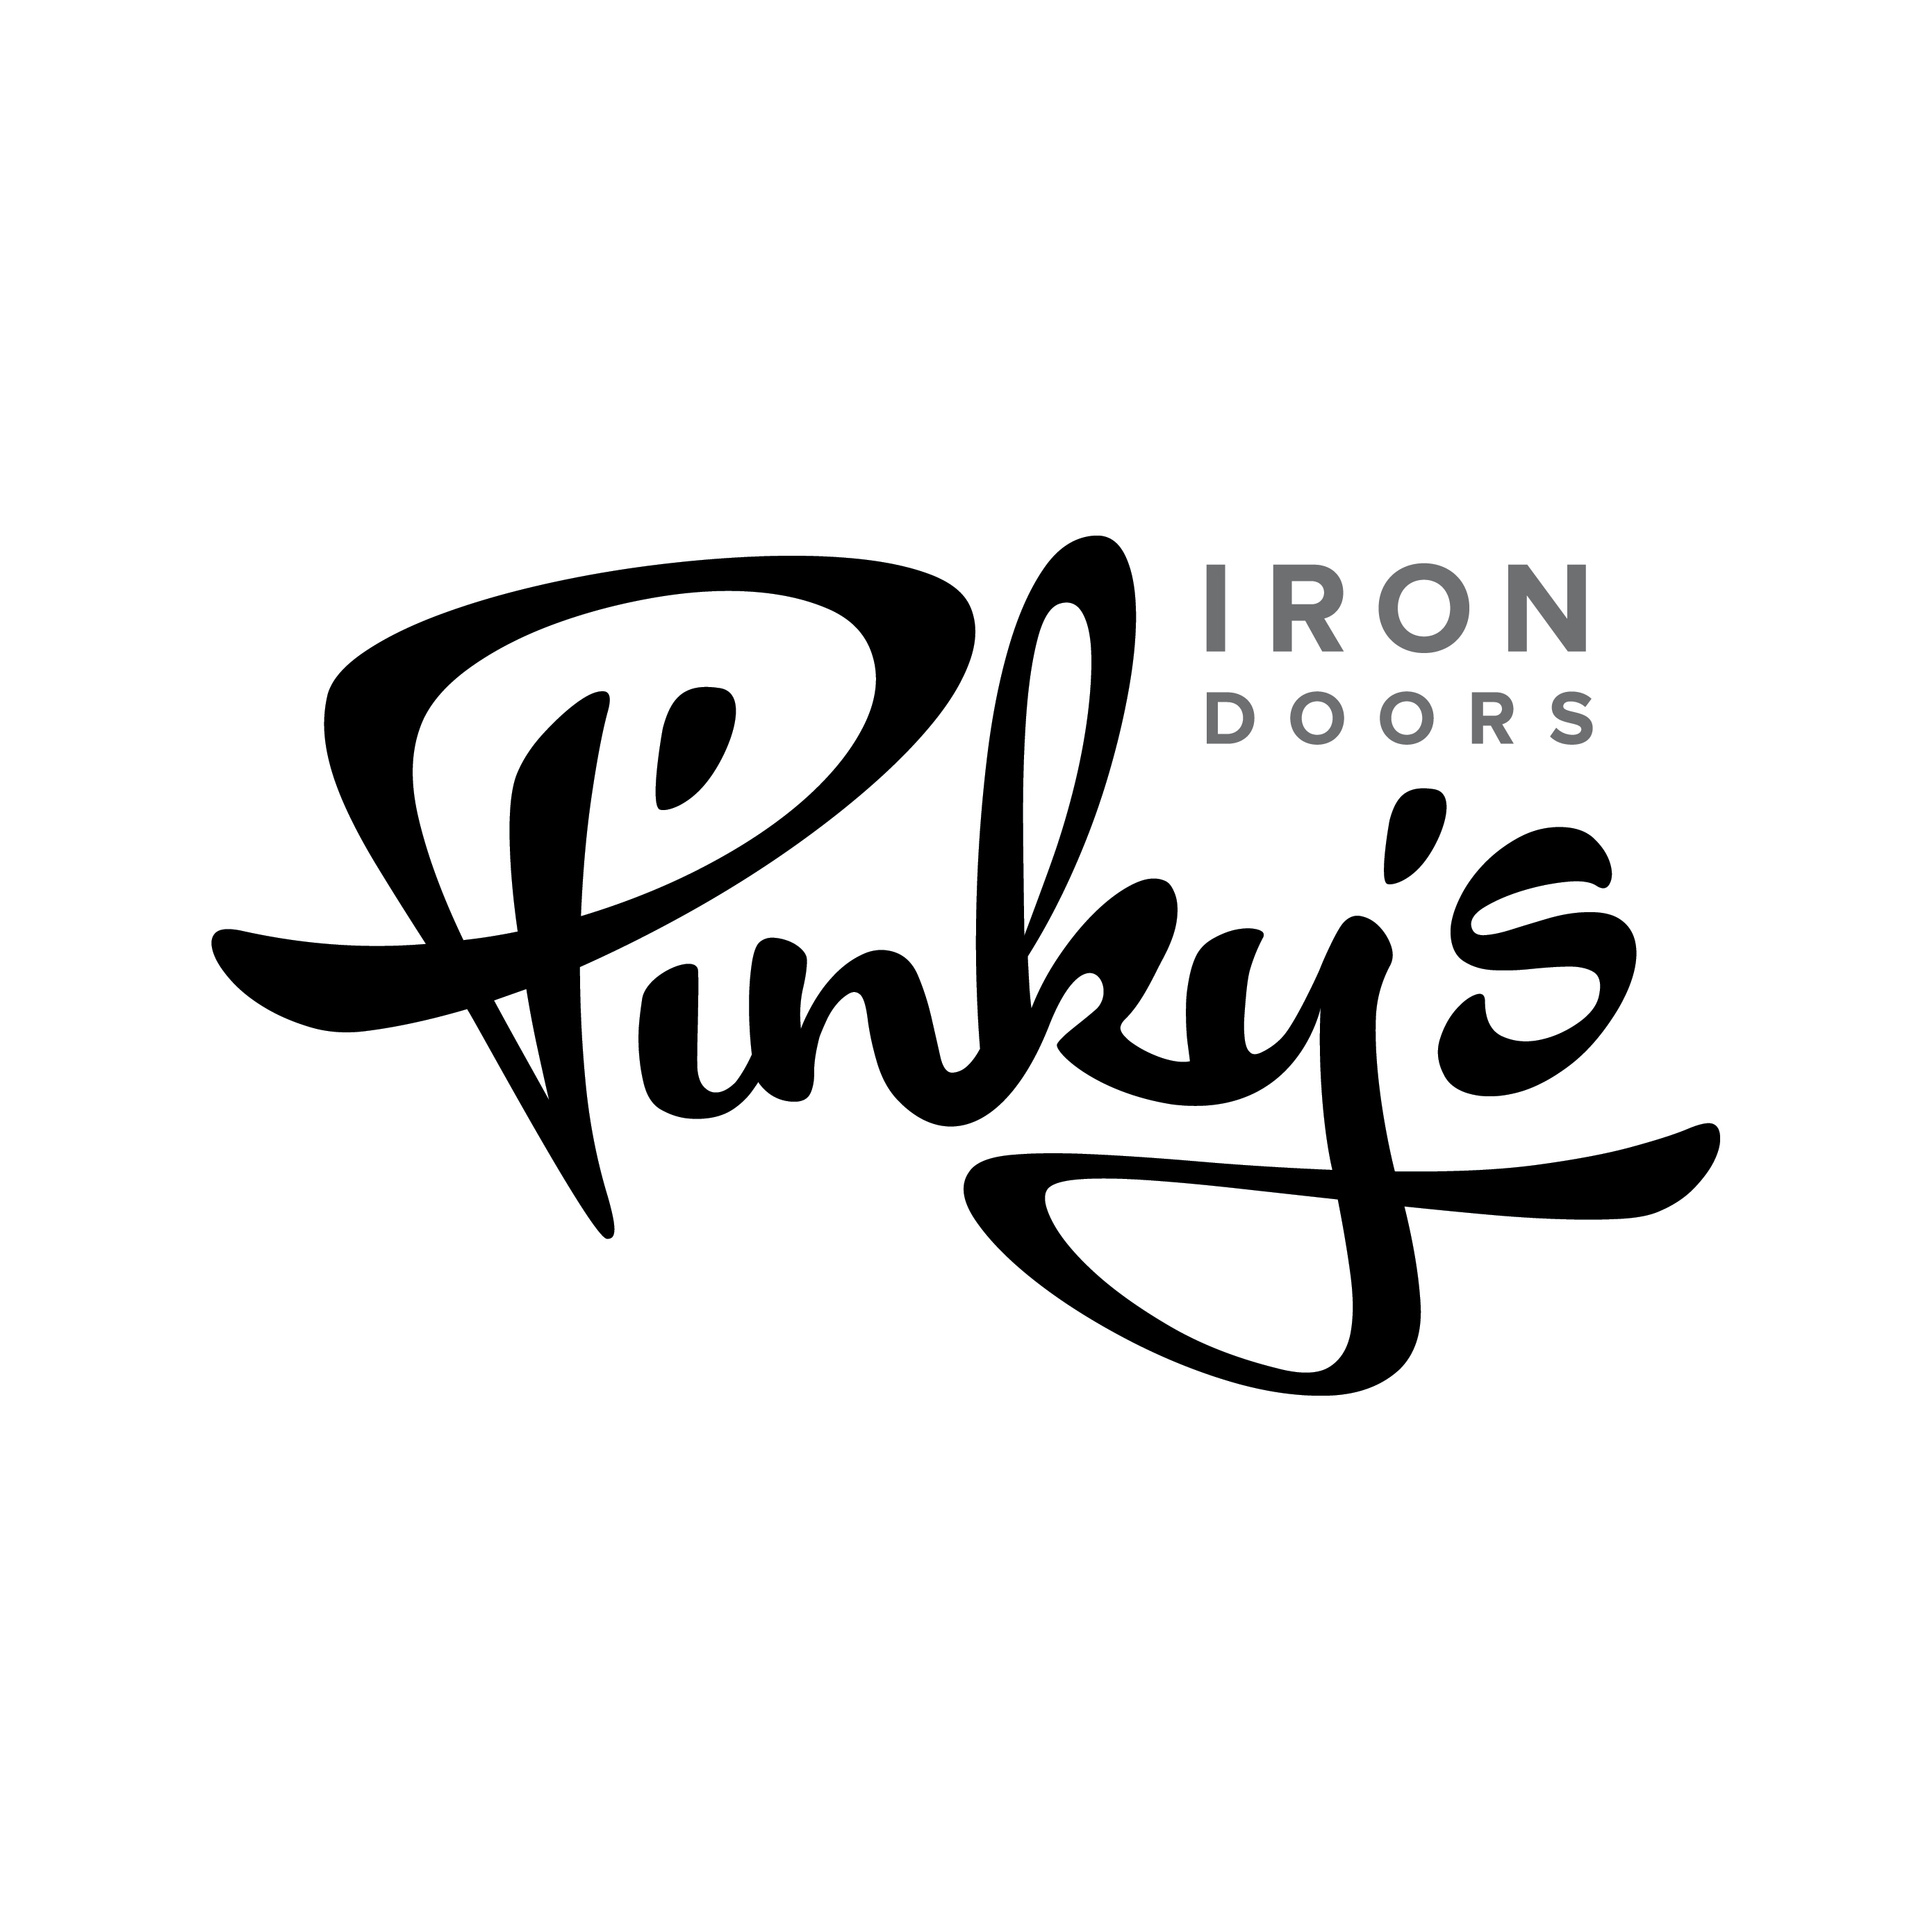 Pinky’s Iron Doors Photo